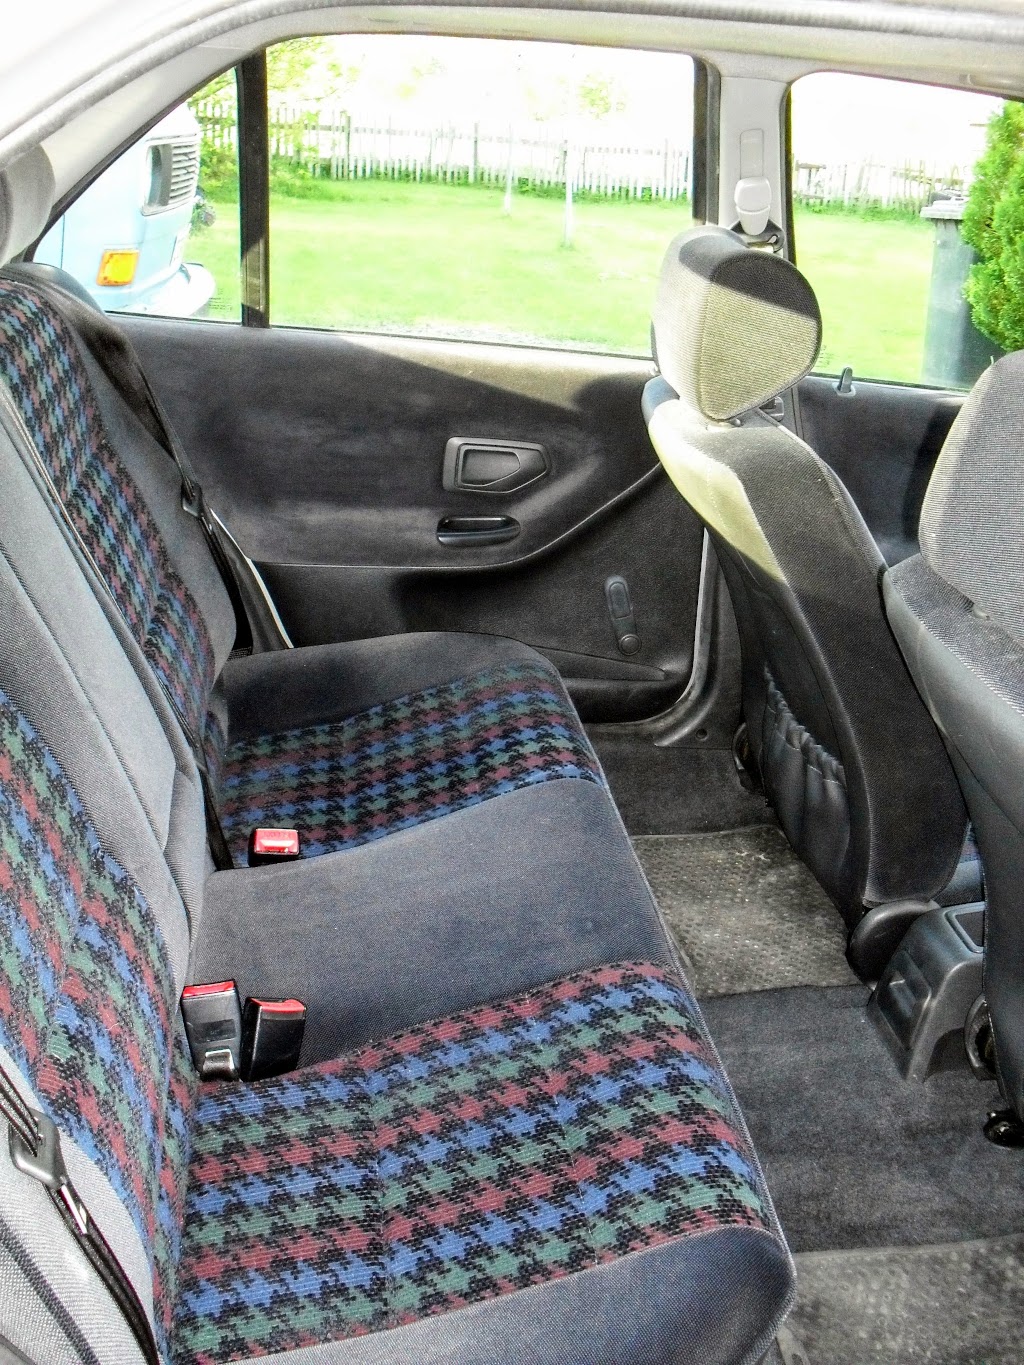 1998 Peugeot 306 interior - rear seat